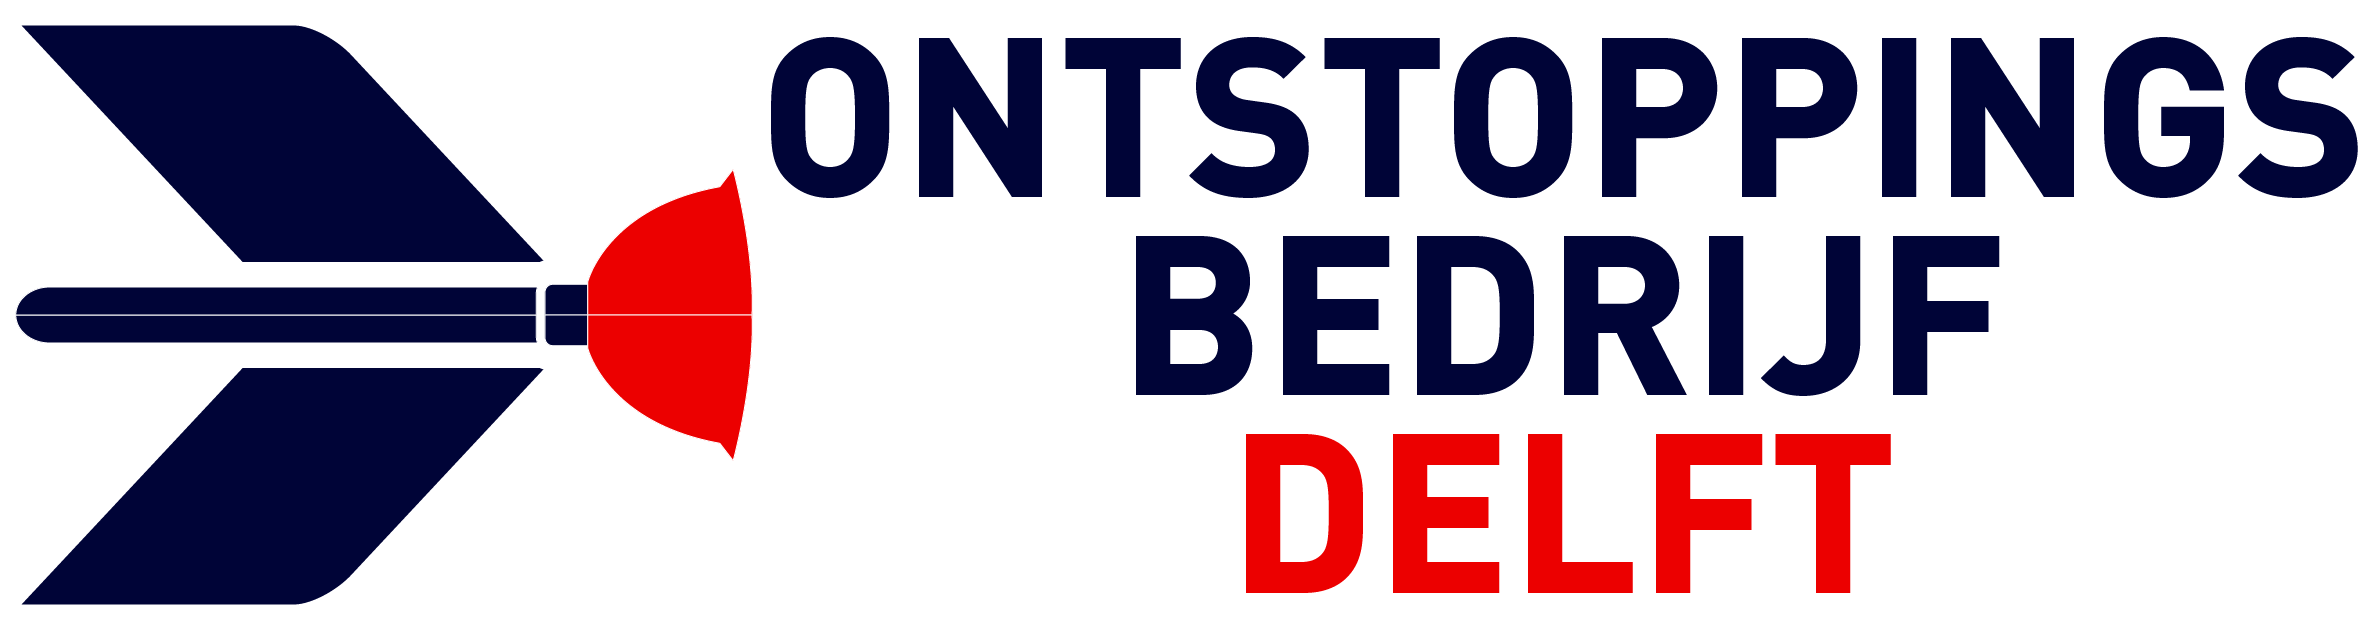 Ontstoppingsbedrijf Delft logo